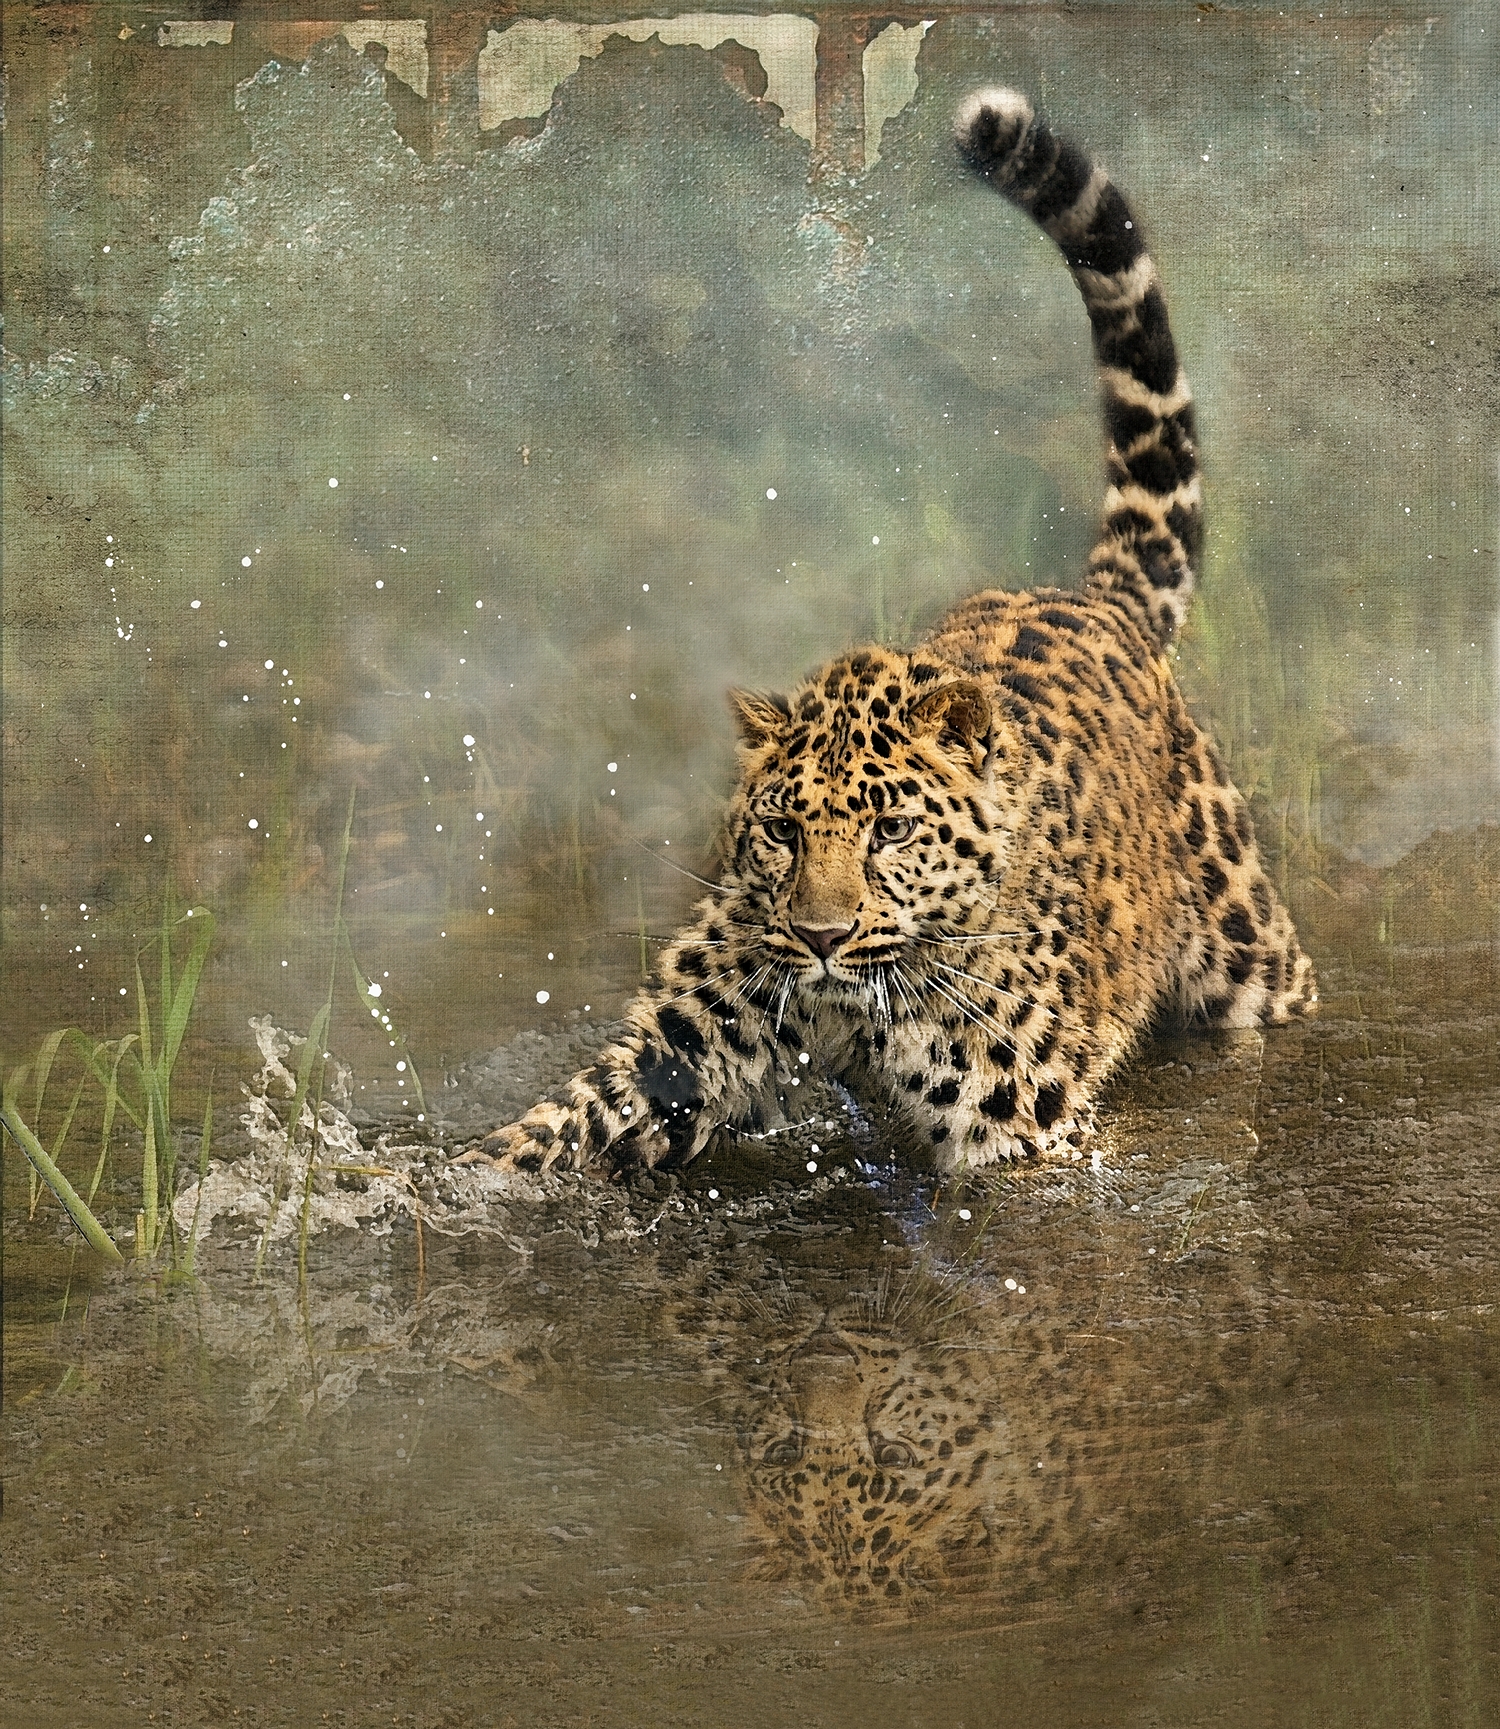 Amur Leopard Plunge